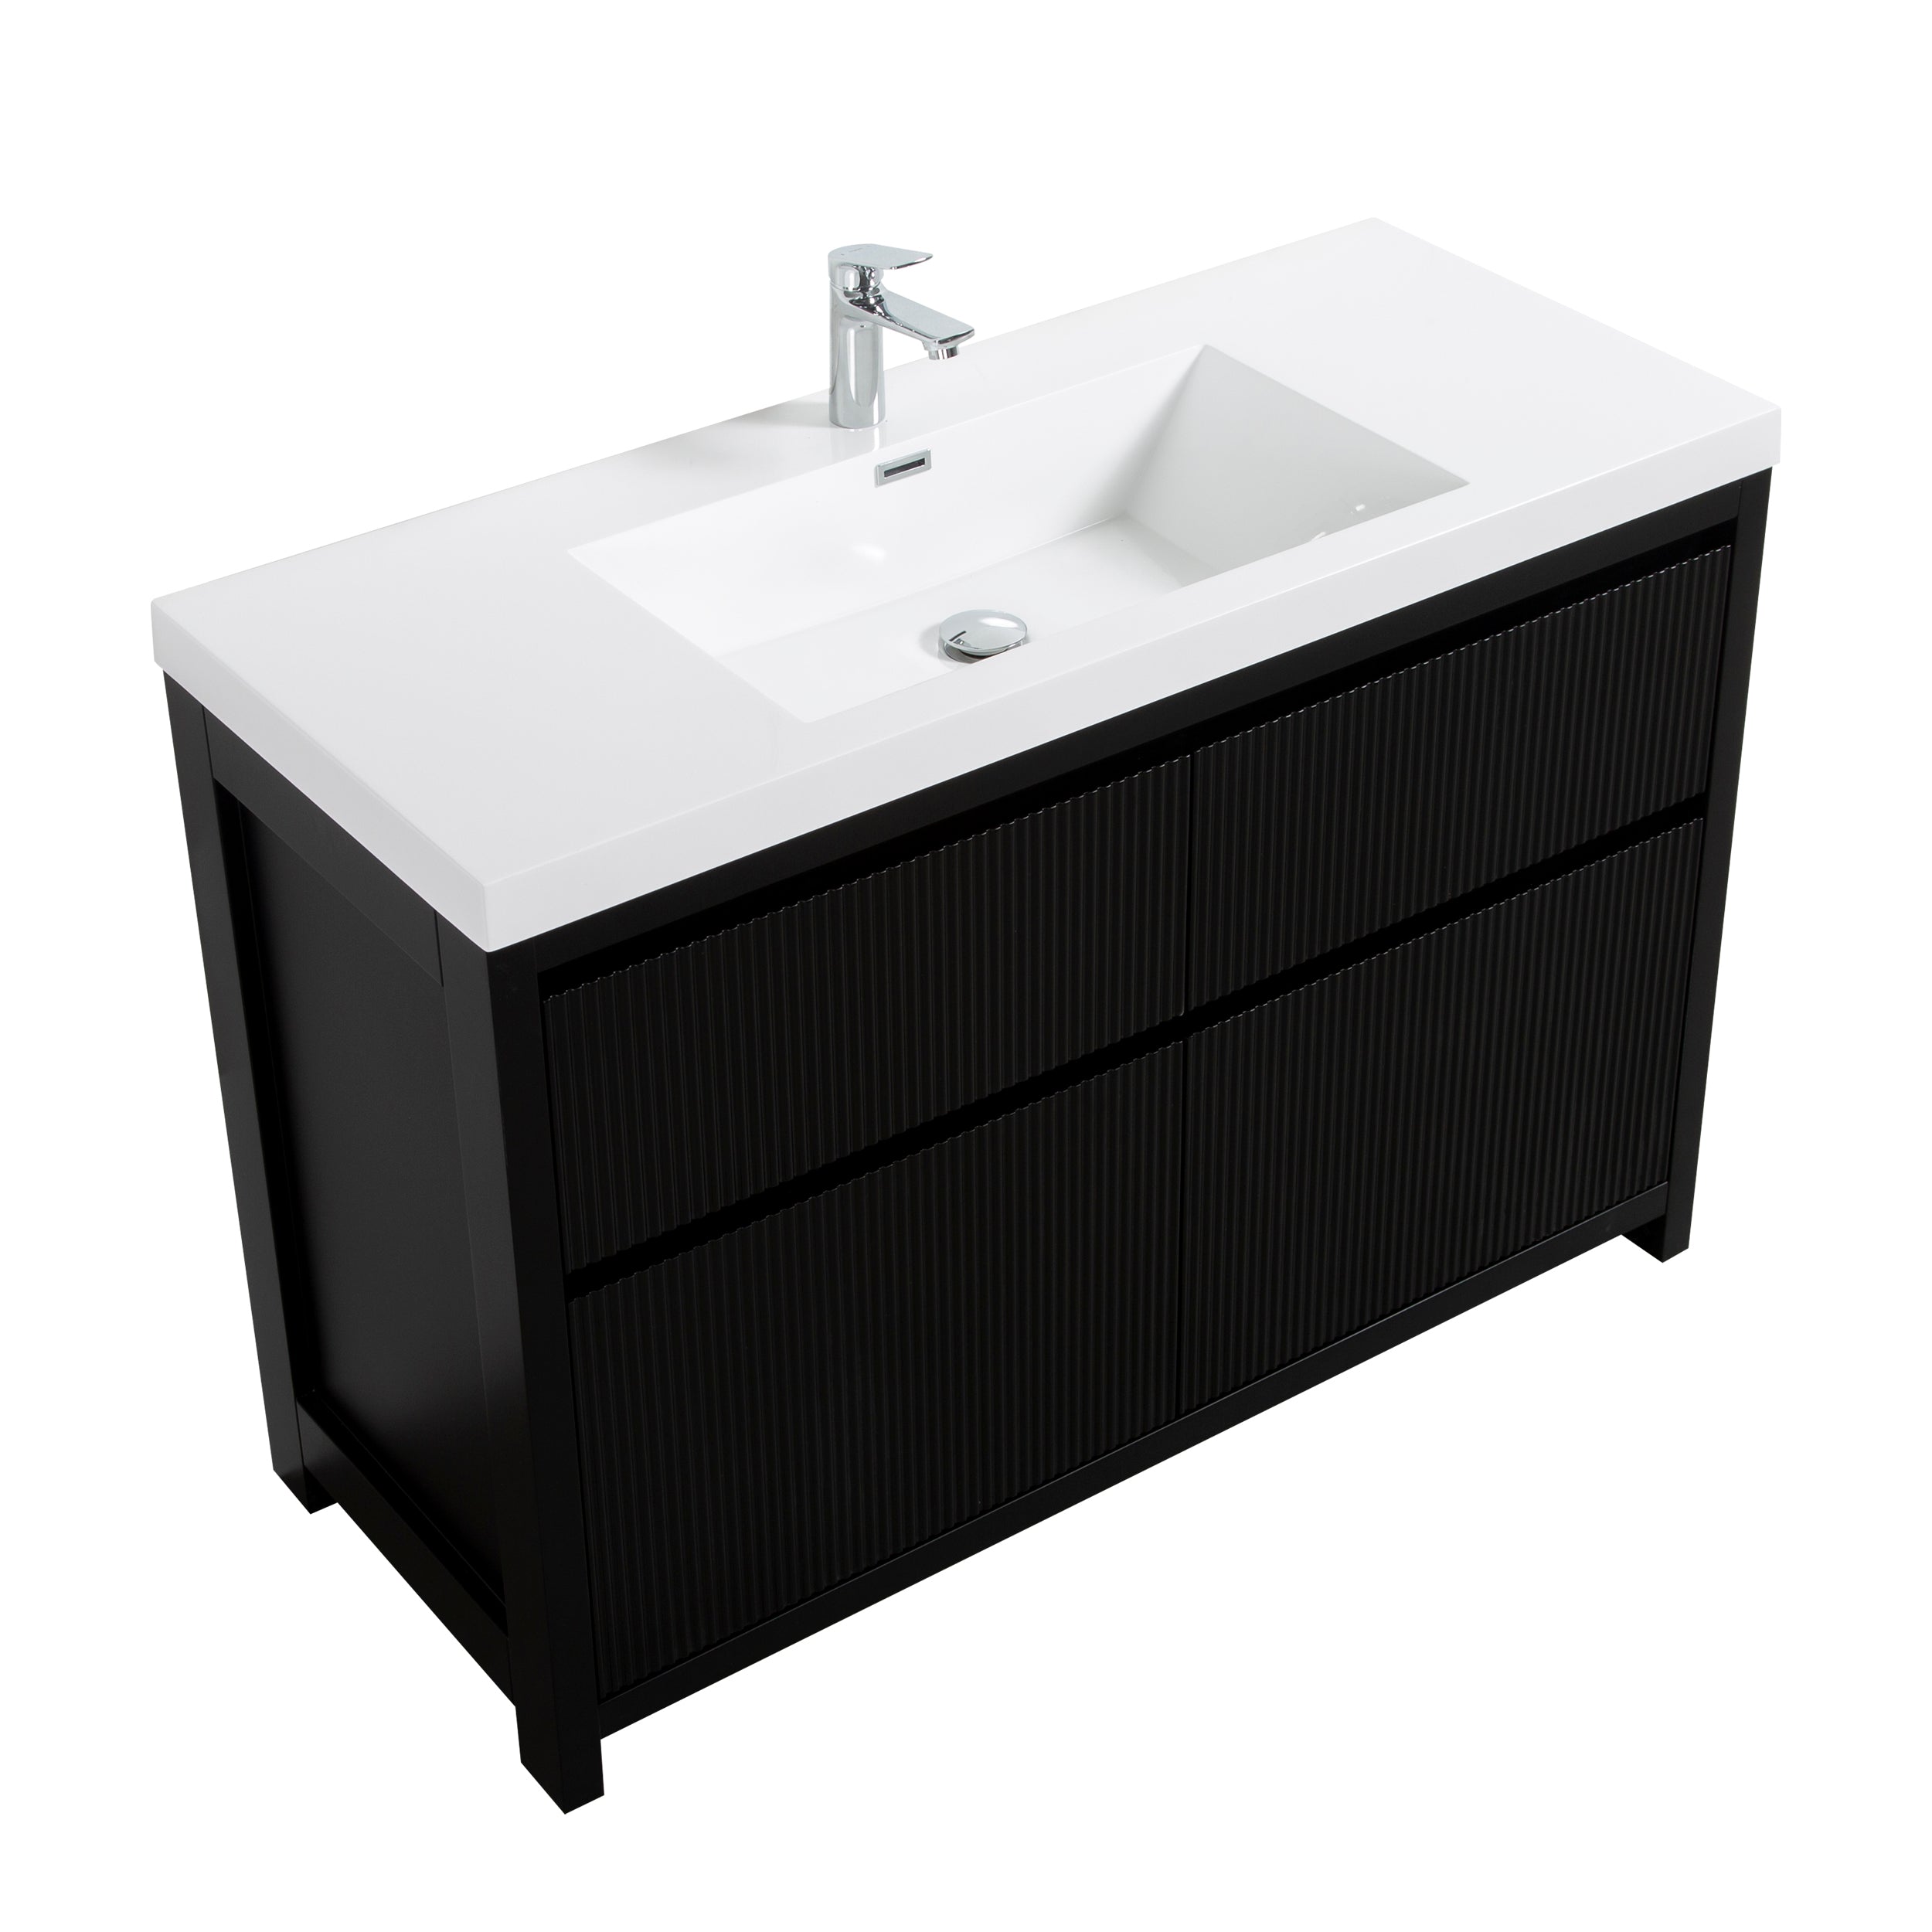 Neos 47.5 Matte Black Cabinet, Square Cultured Marble Sink, Free Standing Modern Vanity Set